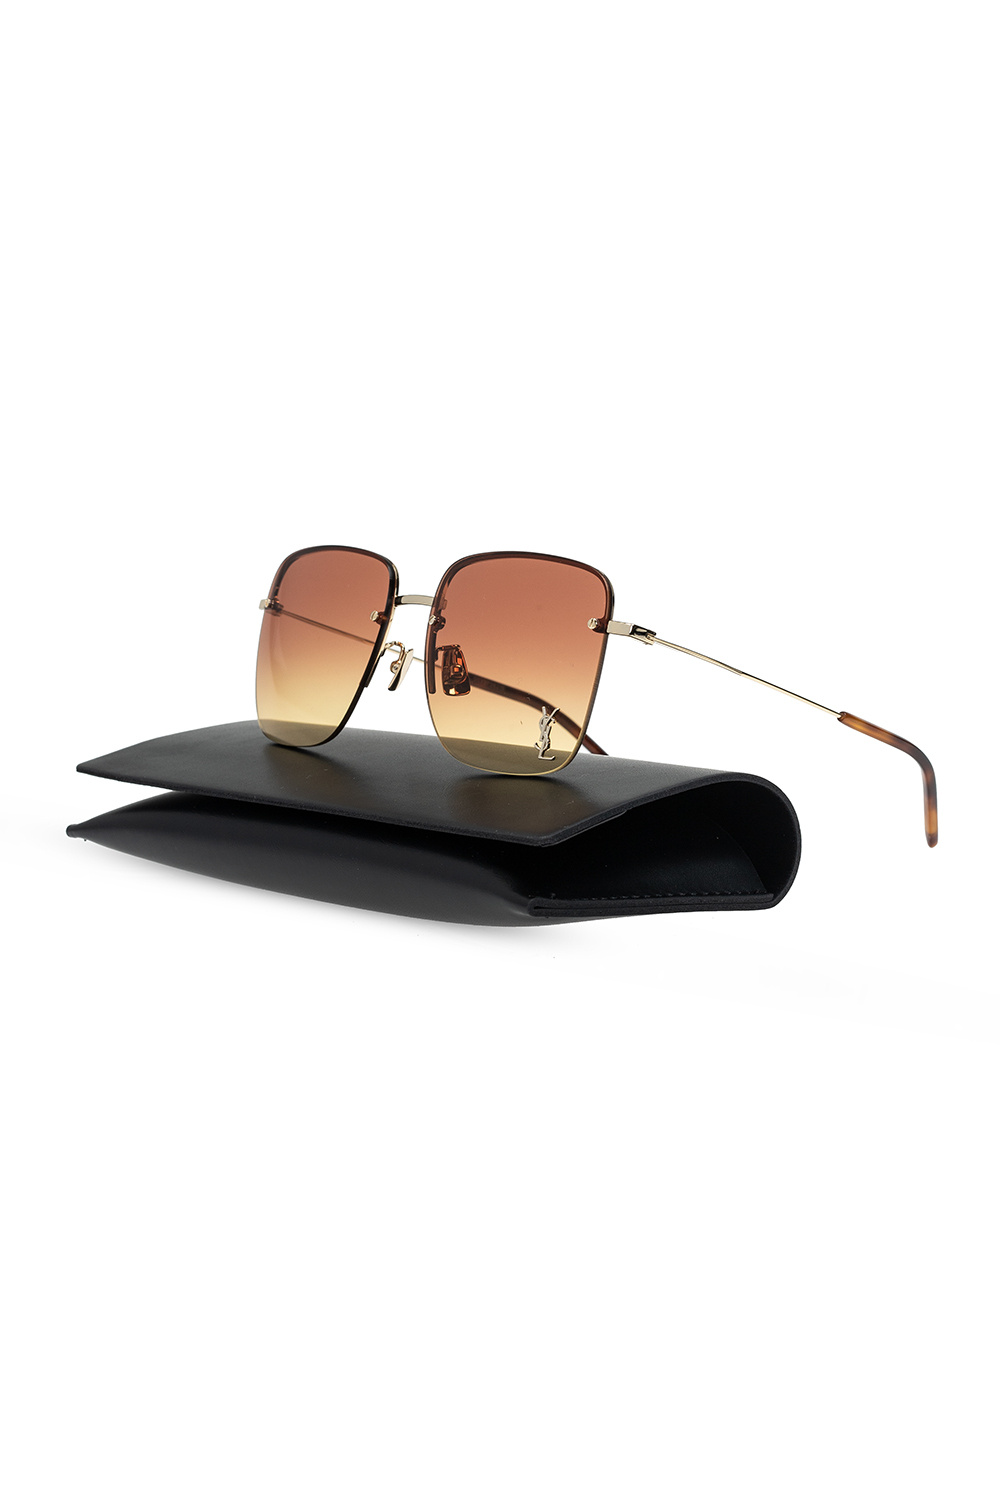 Saint Laurent ‘SL 312 M’ sunglasses with logo